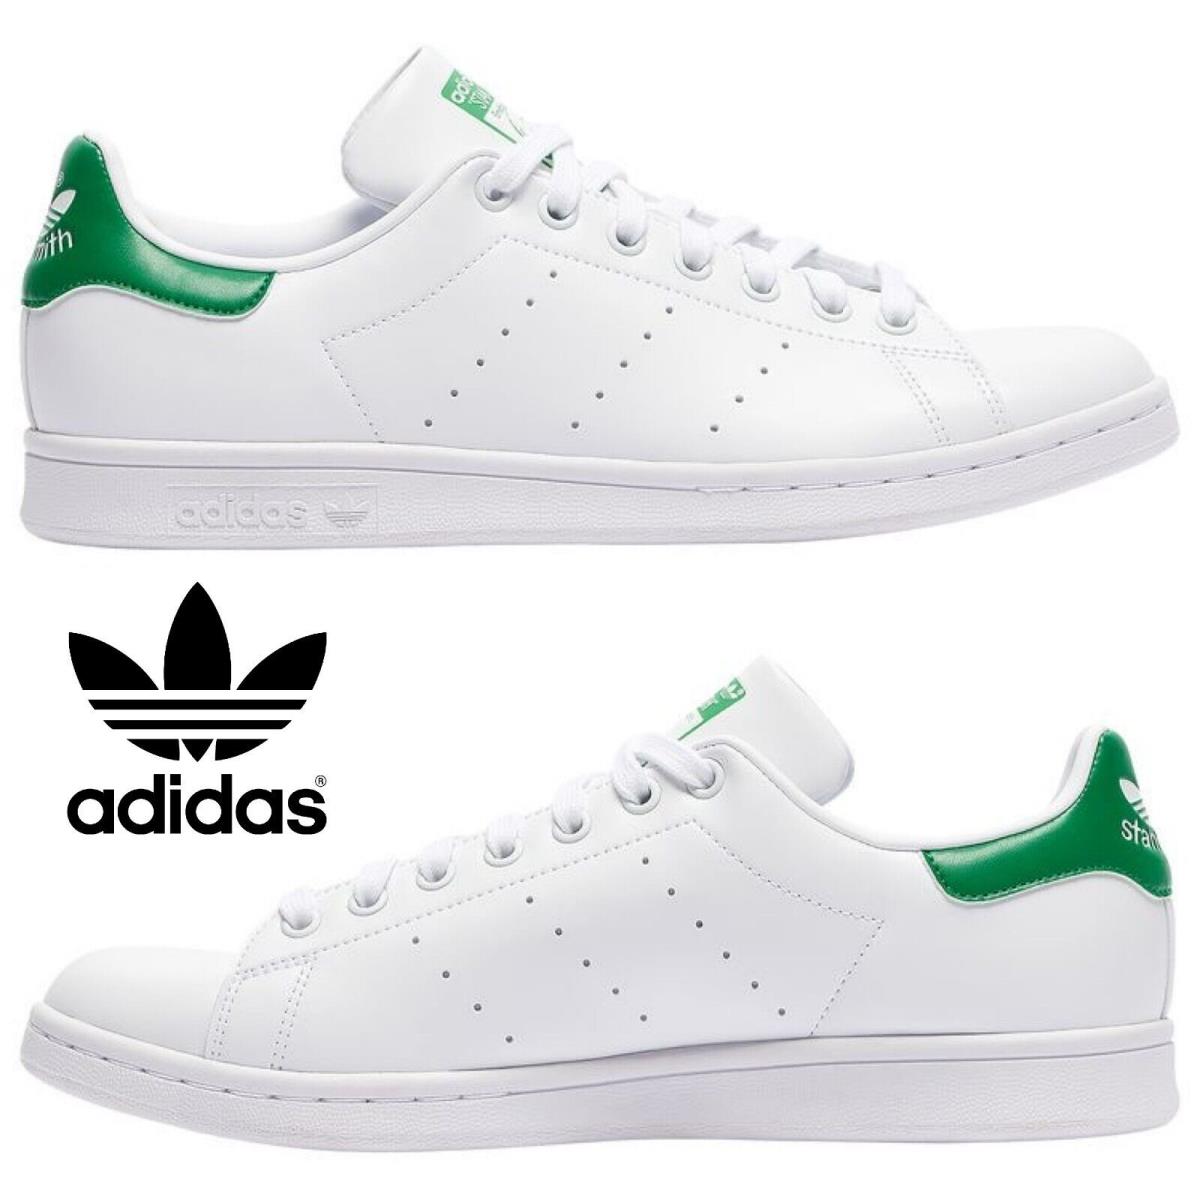 Adidas Originals Stan Smith Men`s Sneakers Comfort Sport Casual Shoe Green White